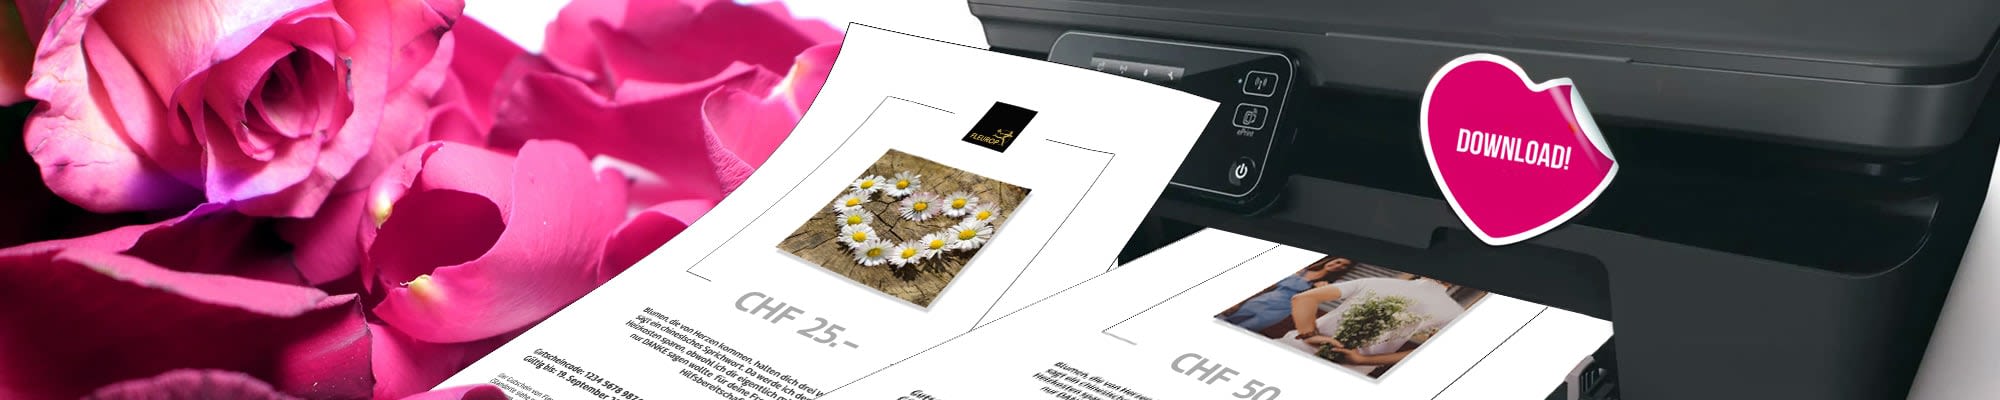 PDF vouchers to print out & decorative tips